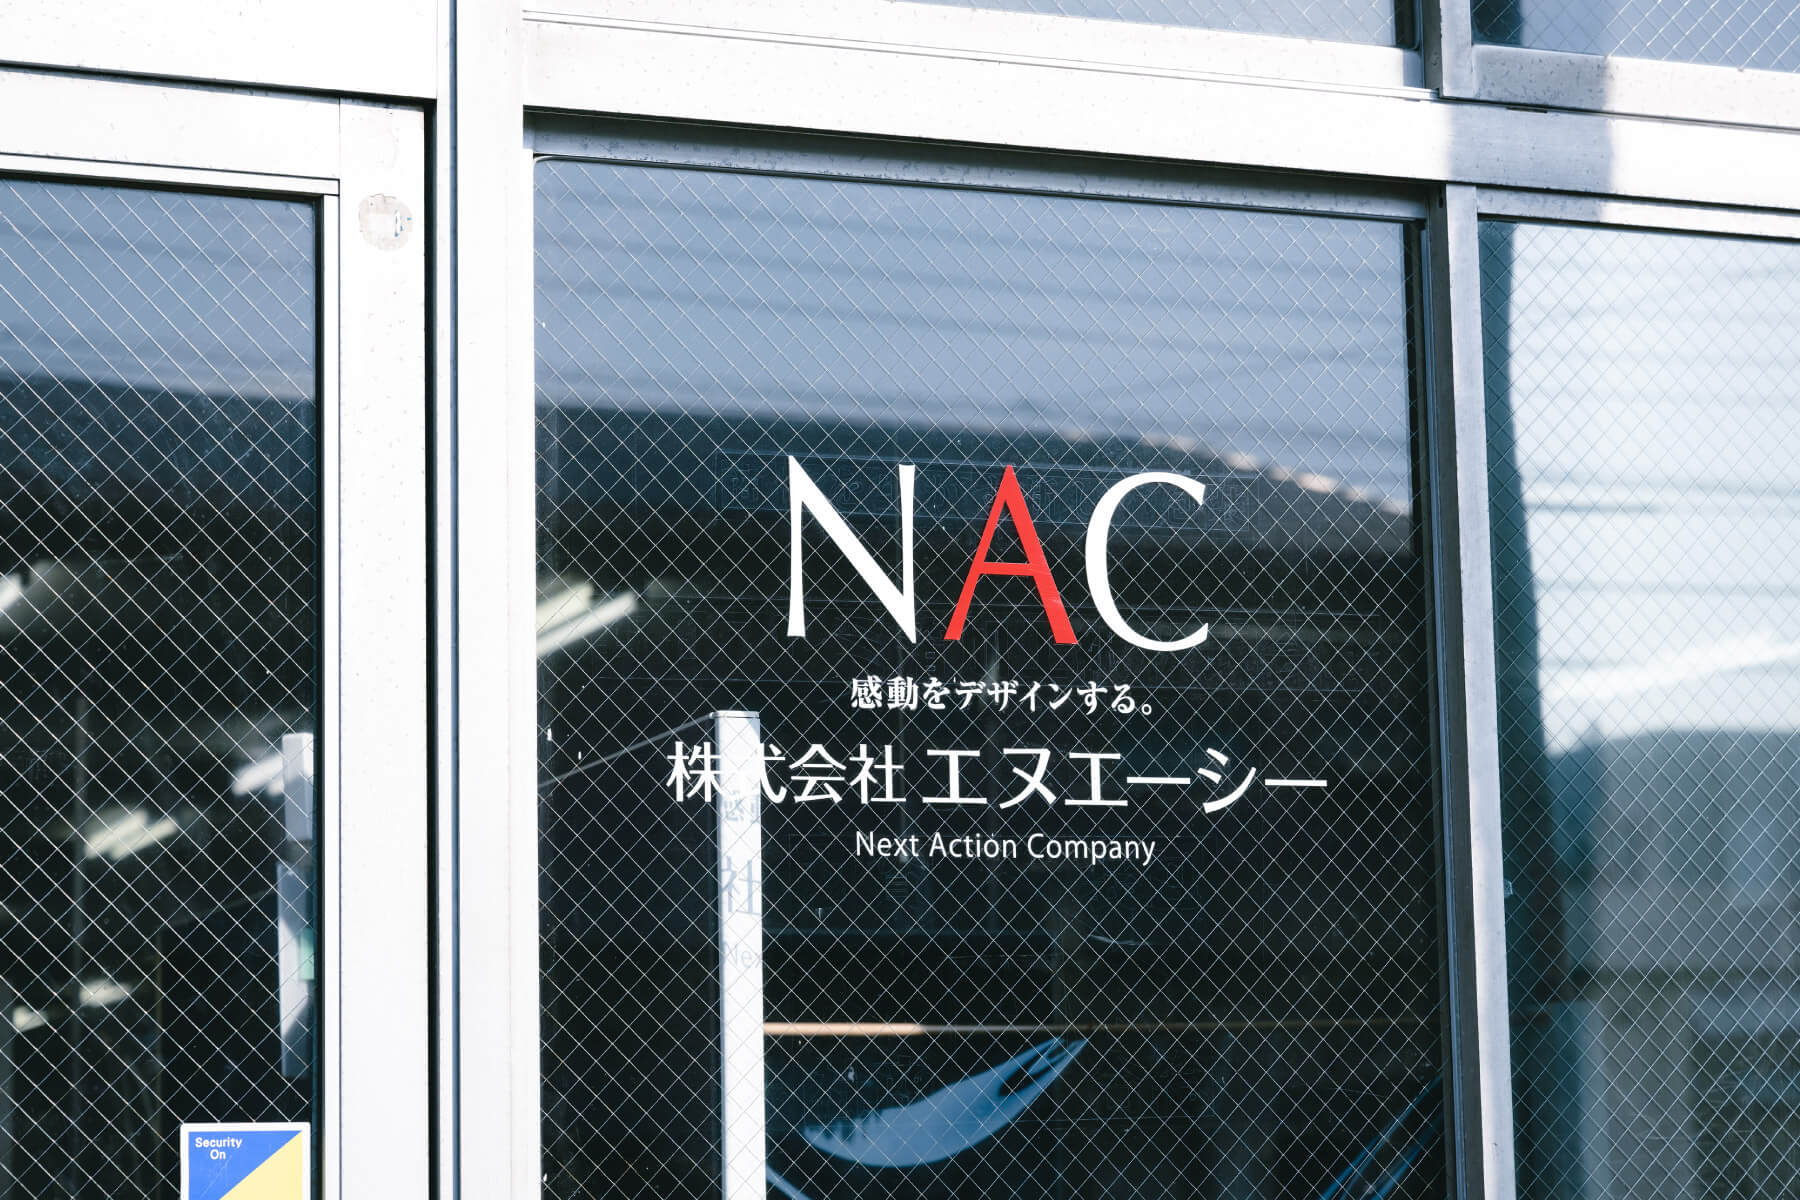 NAC Co., Ltd., based in Mishima City, Shizuoka Prefecture